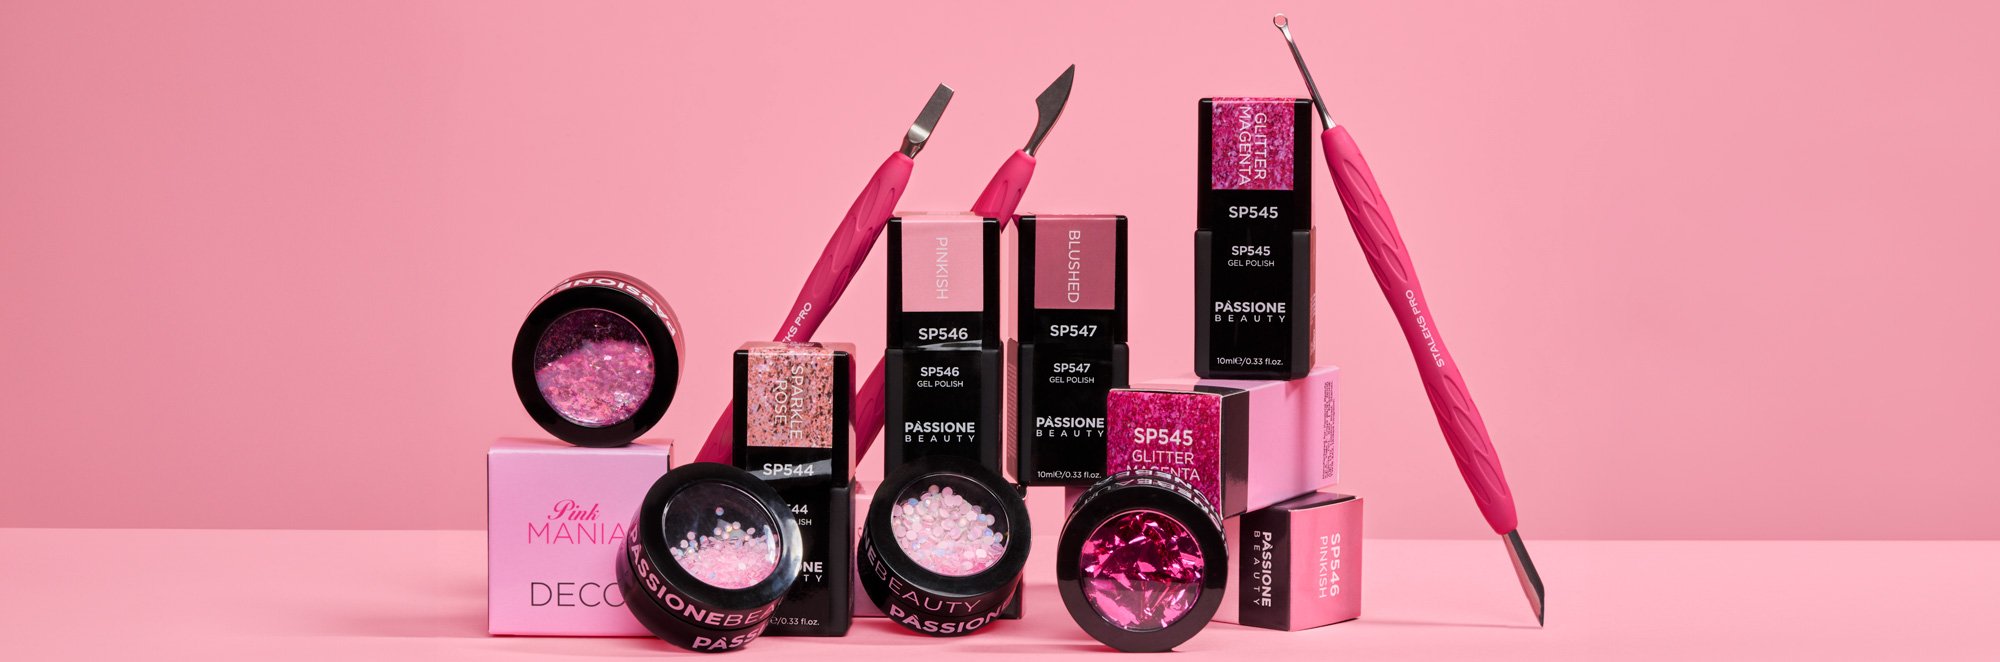 Blog Passione Beauty collezione pink